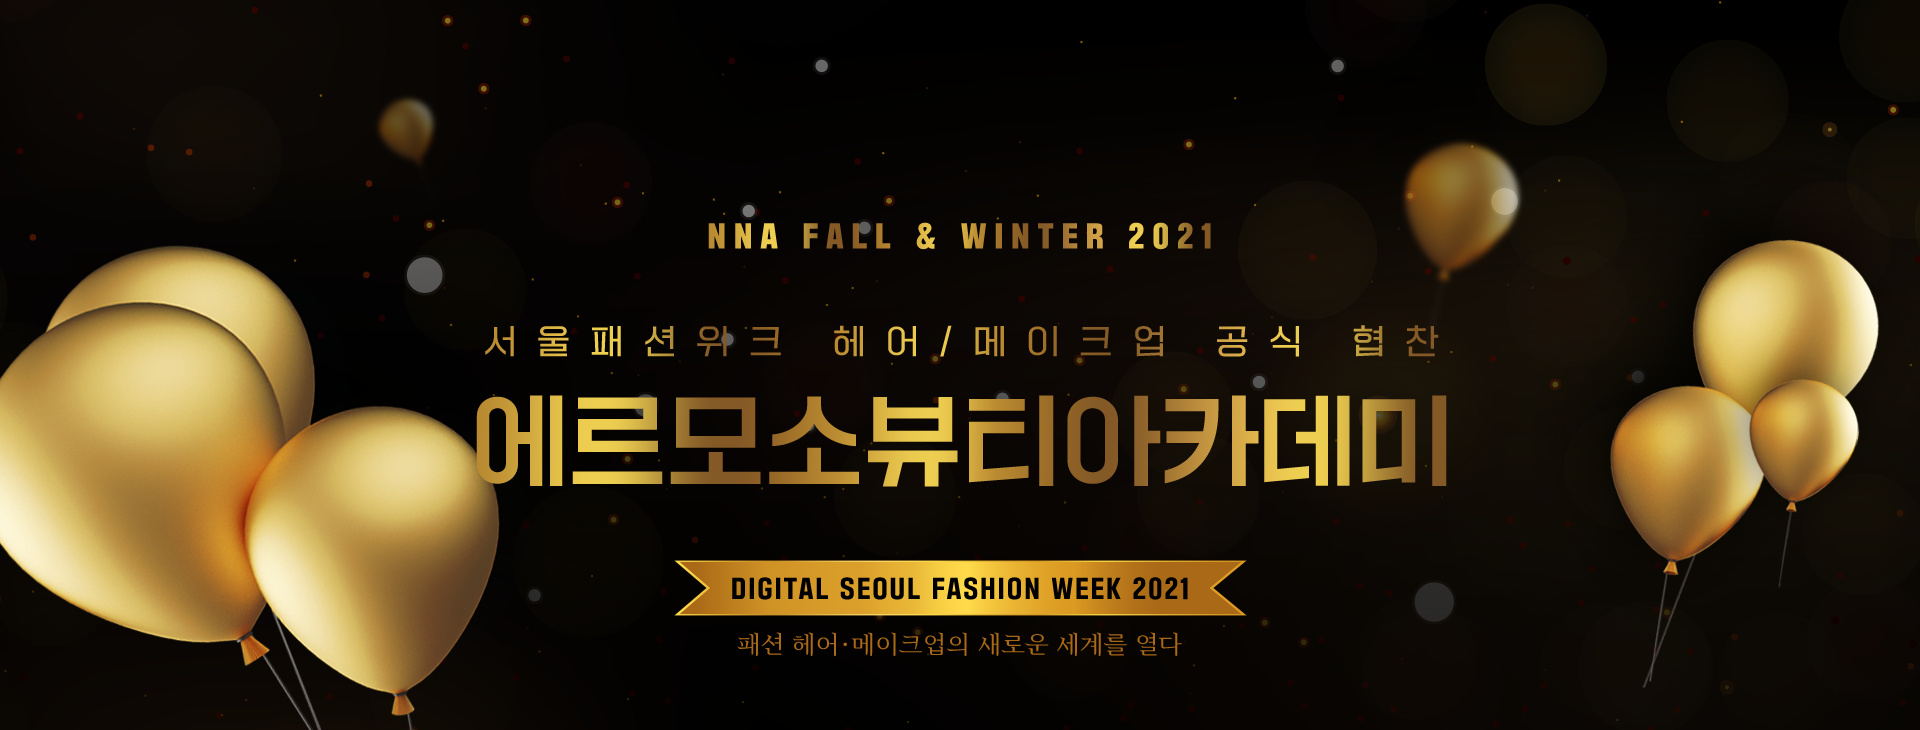 'Digital Seoul Fashion Week 2021' 패션 헤어,메이크업의 새로운 세계를 열다